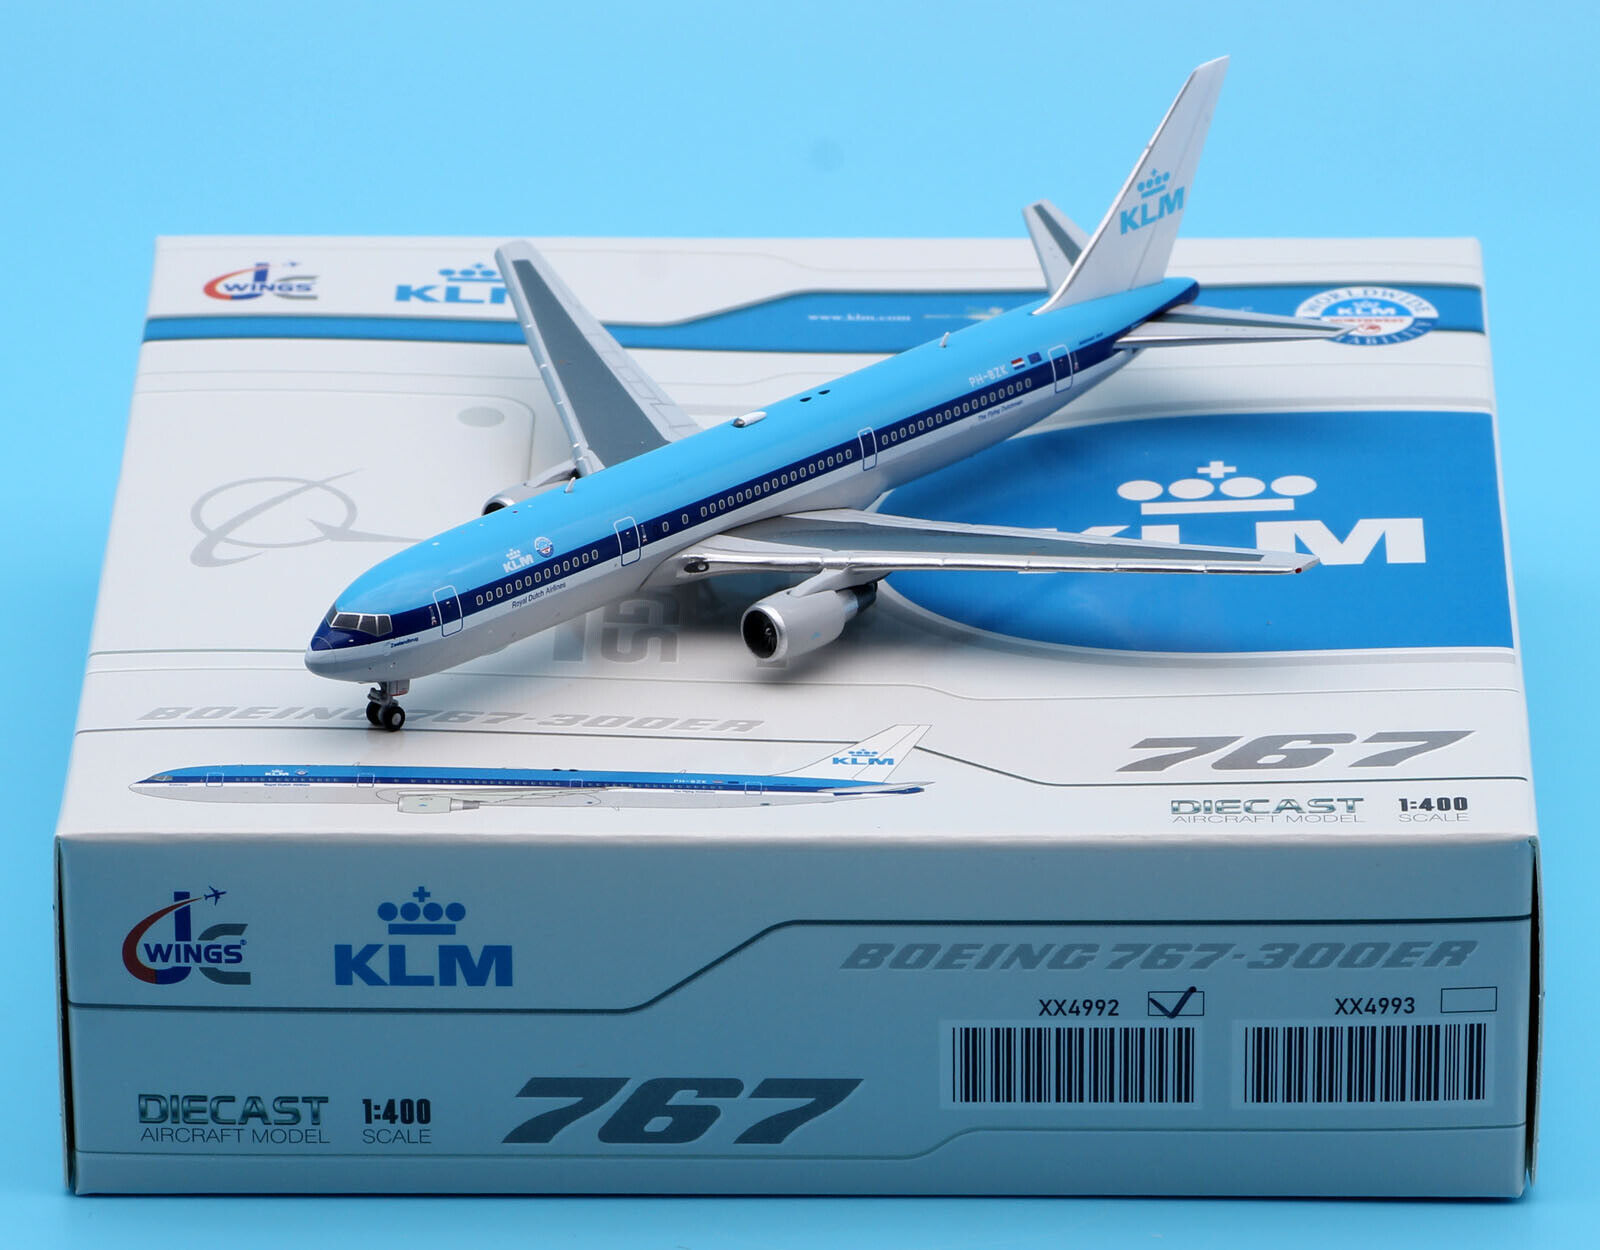 JC Wings 1:400 KLM Airlines Boeing B767-300ER Diecast Aircraft Jet Model PH-BZK